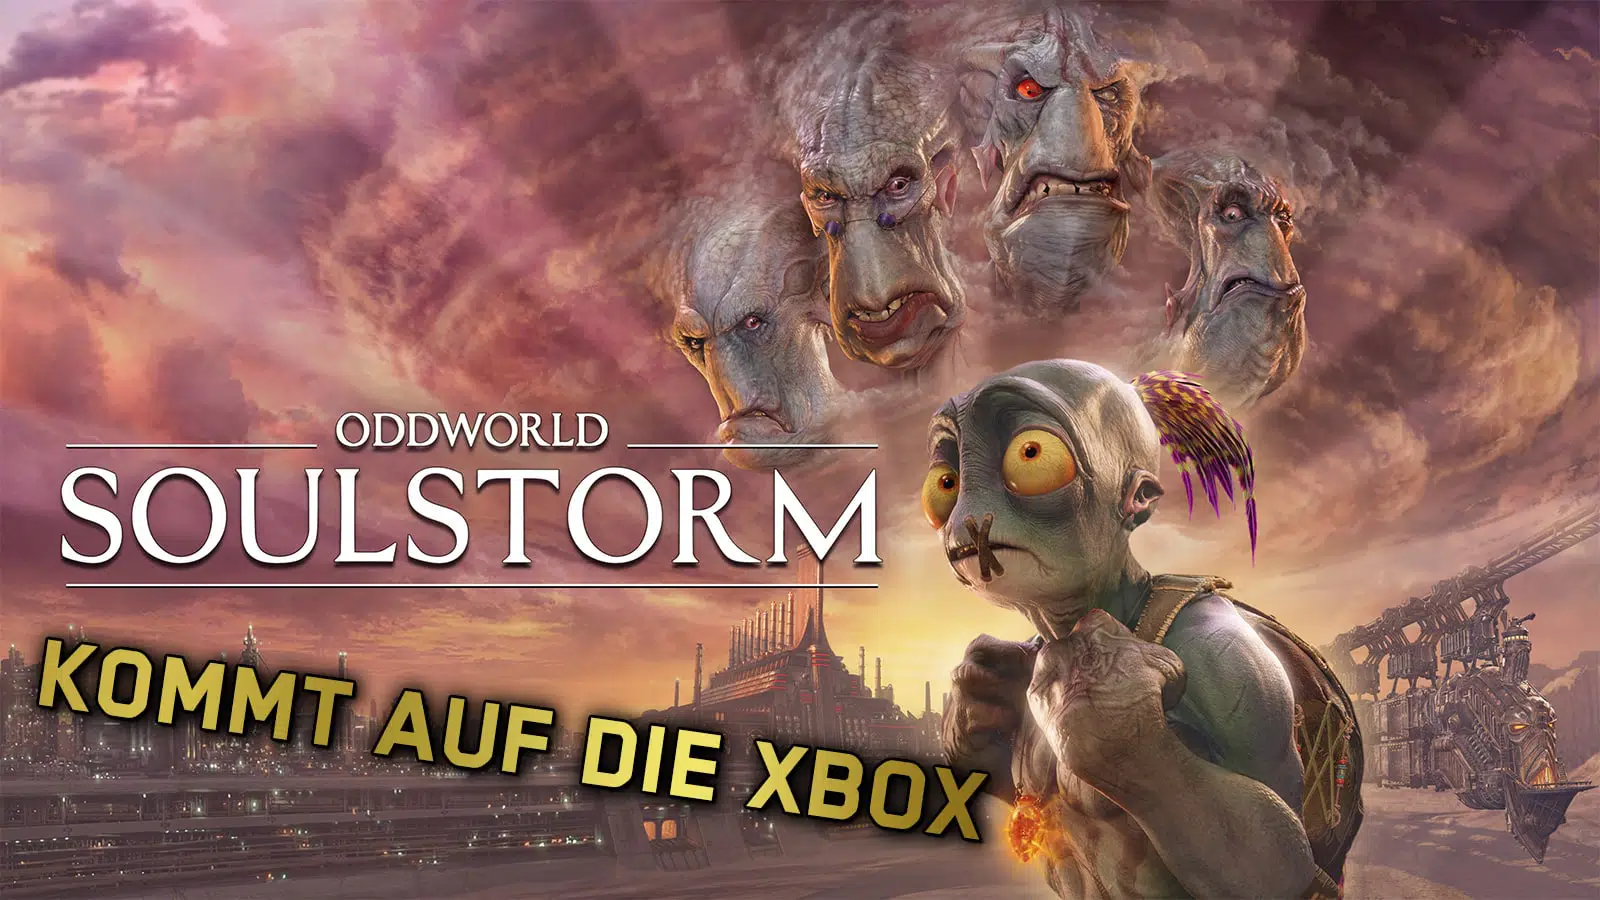 OddowrldSoulstorm Xbox